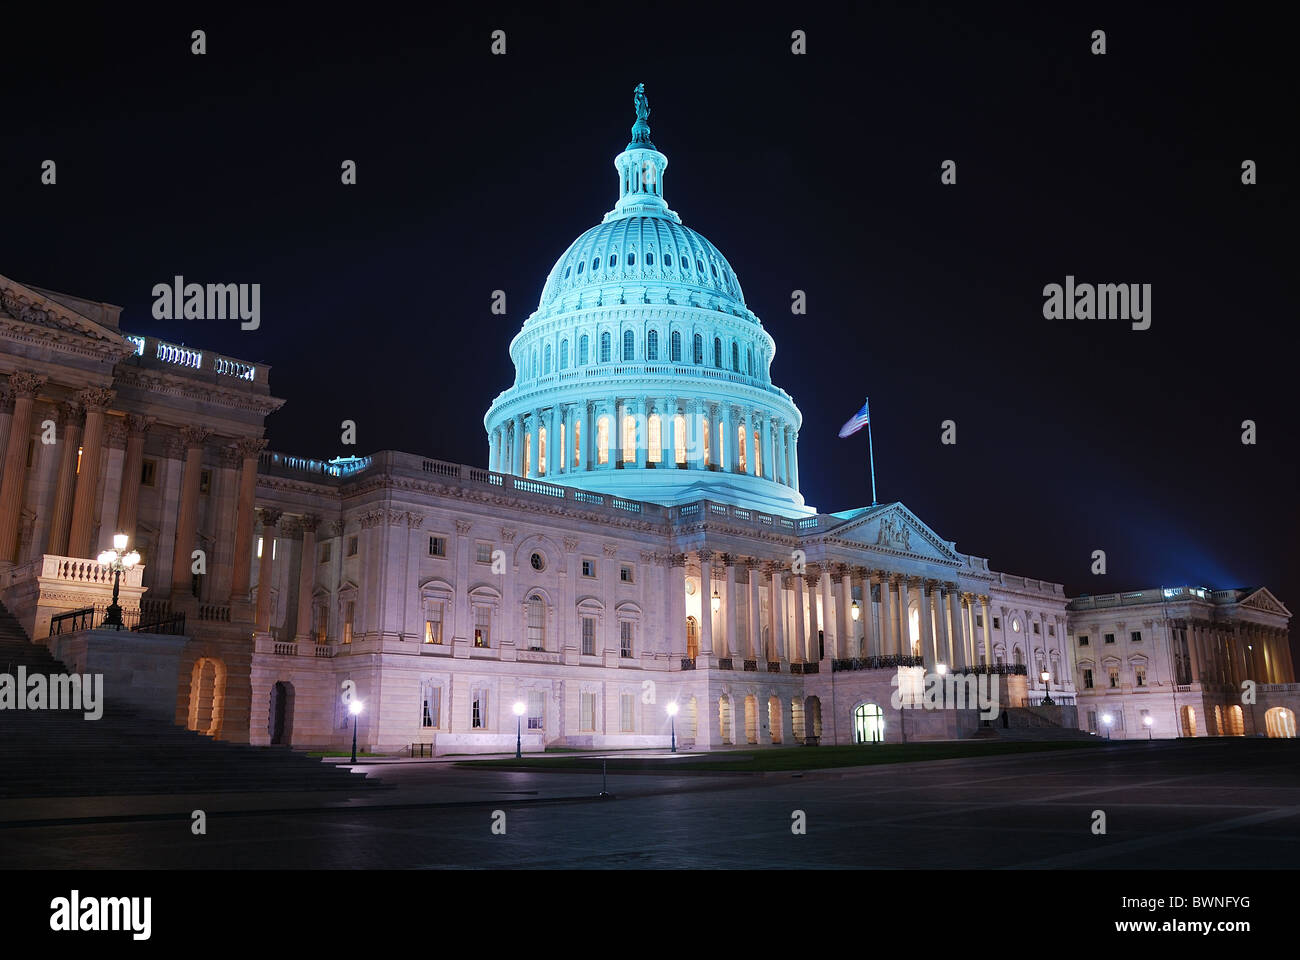 Capitol hill building at night illuminated with light, Washington DC. Stock Photo